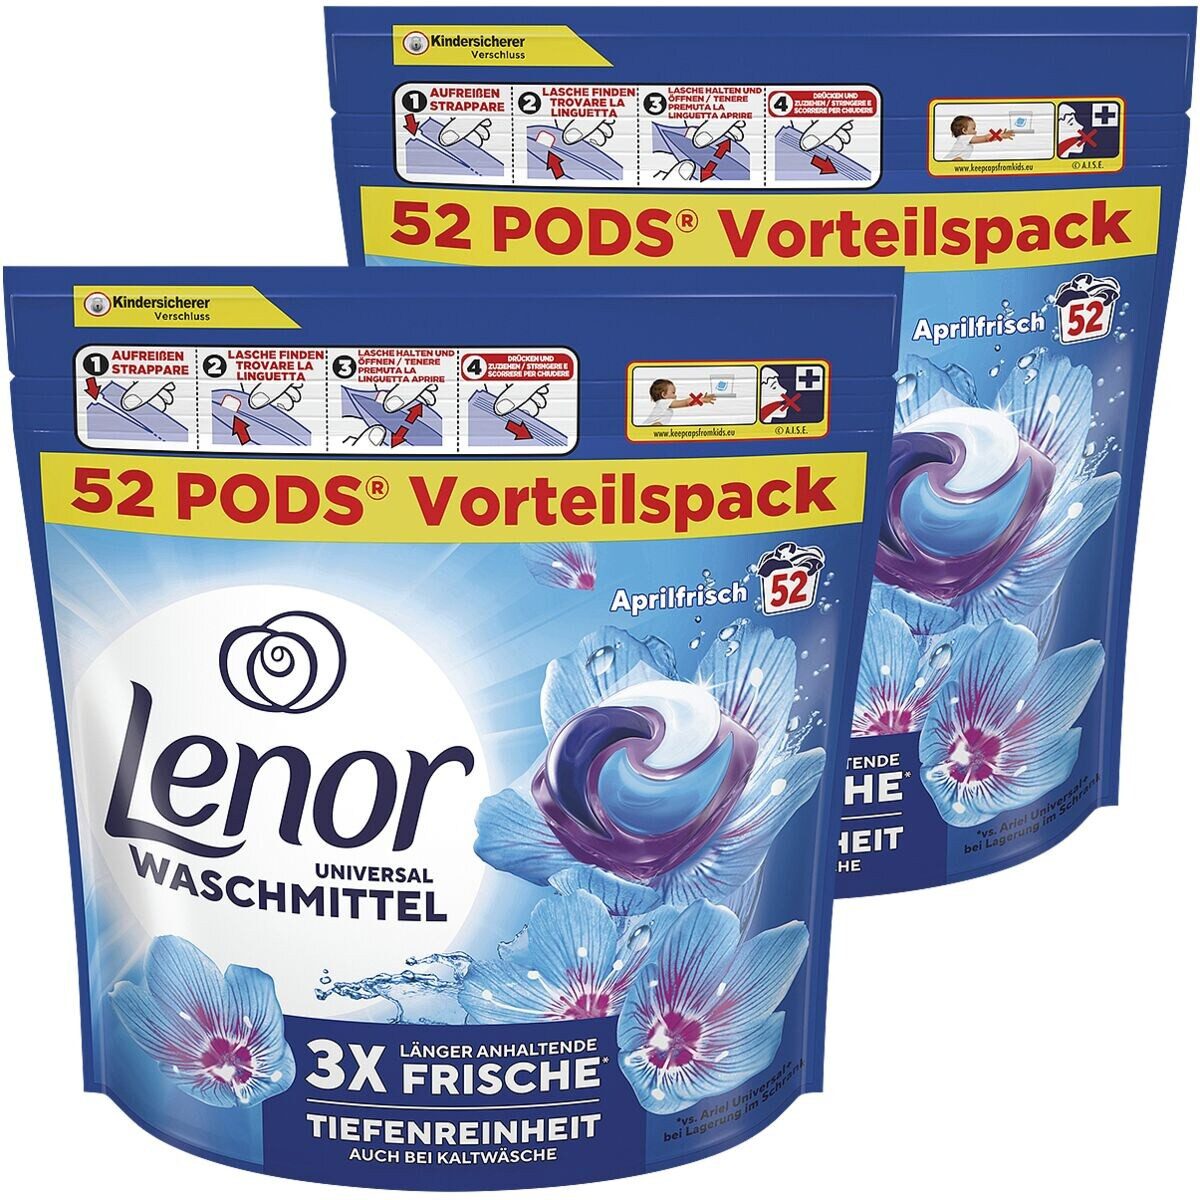 LENOR Aprilfrisch Vollwaschmittel (104 WL, 2x 52 Pods)